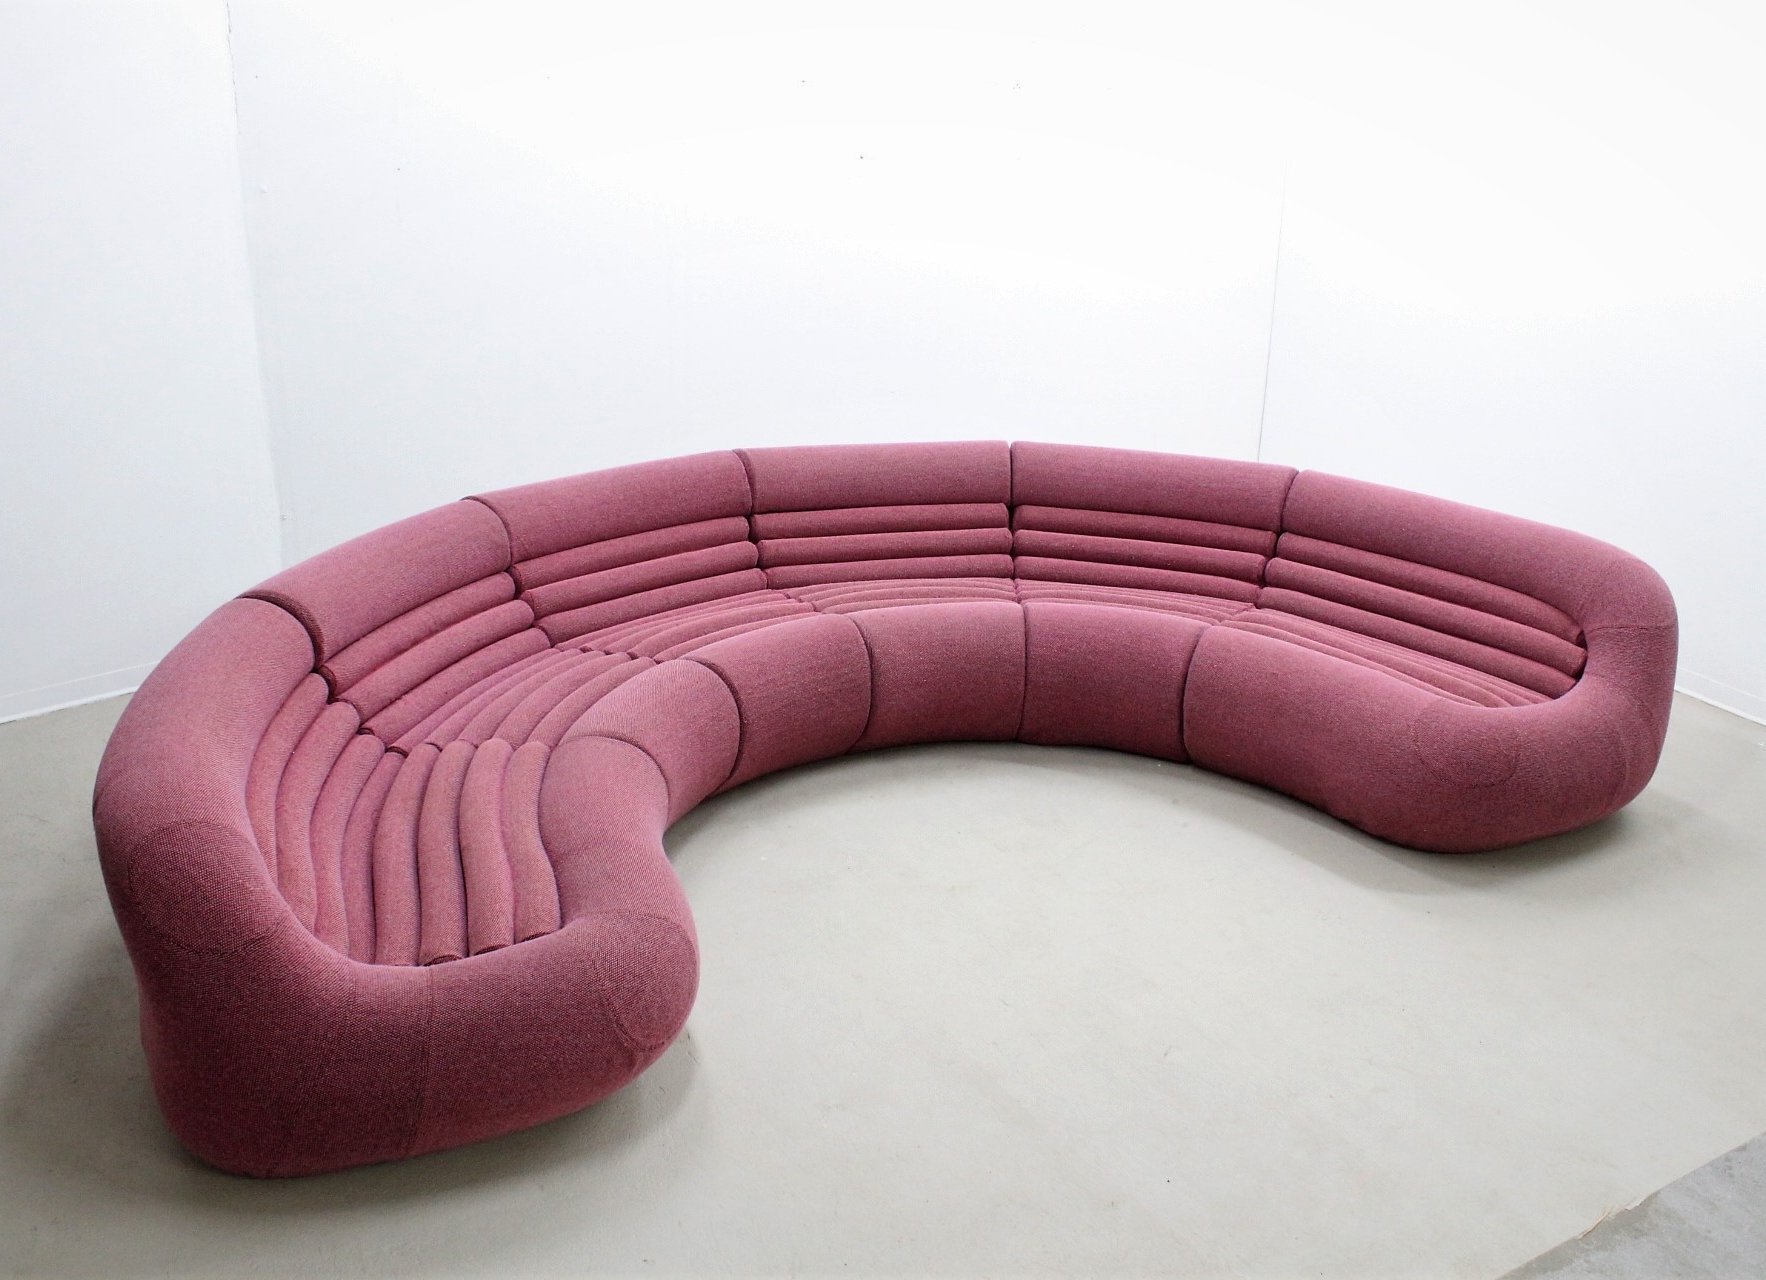 rare-carrera-modular-sofa-by-lomazzi-de-pas-durbino-for-bbb-emmebonacina-1974.jpeg